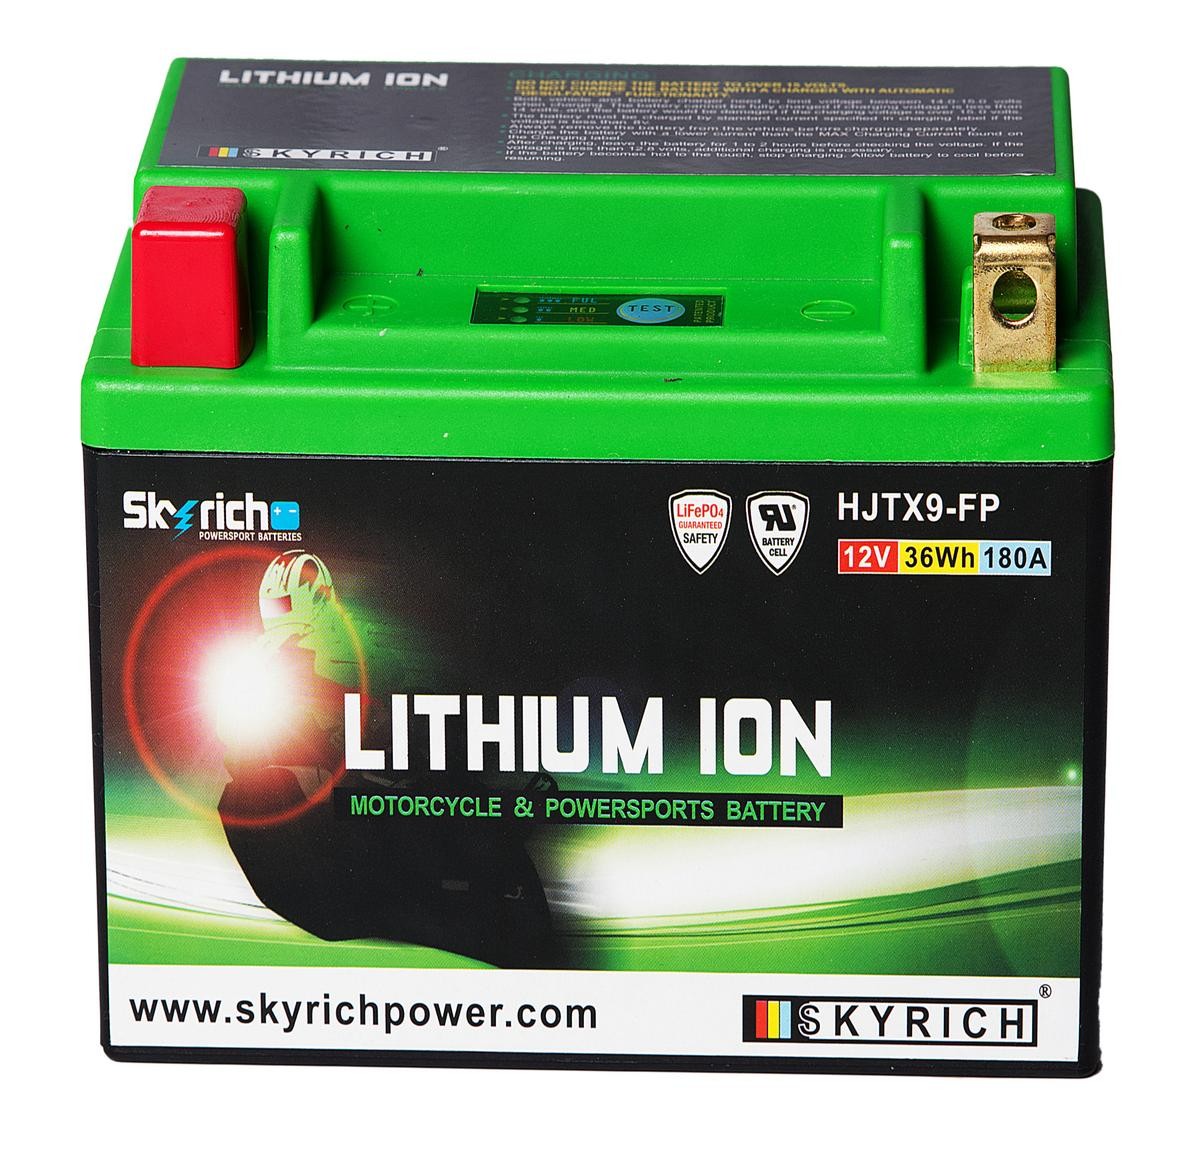 TRIUMPH STREET Batterie 12V 3Ah 180A N Li-Ionen-Batterie SKYRICH LITHIUM ION HJTX9-FP